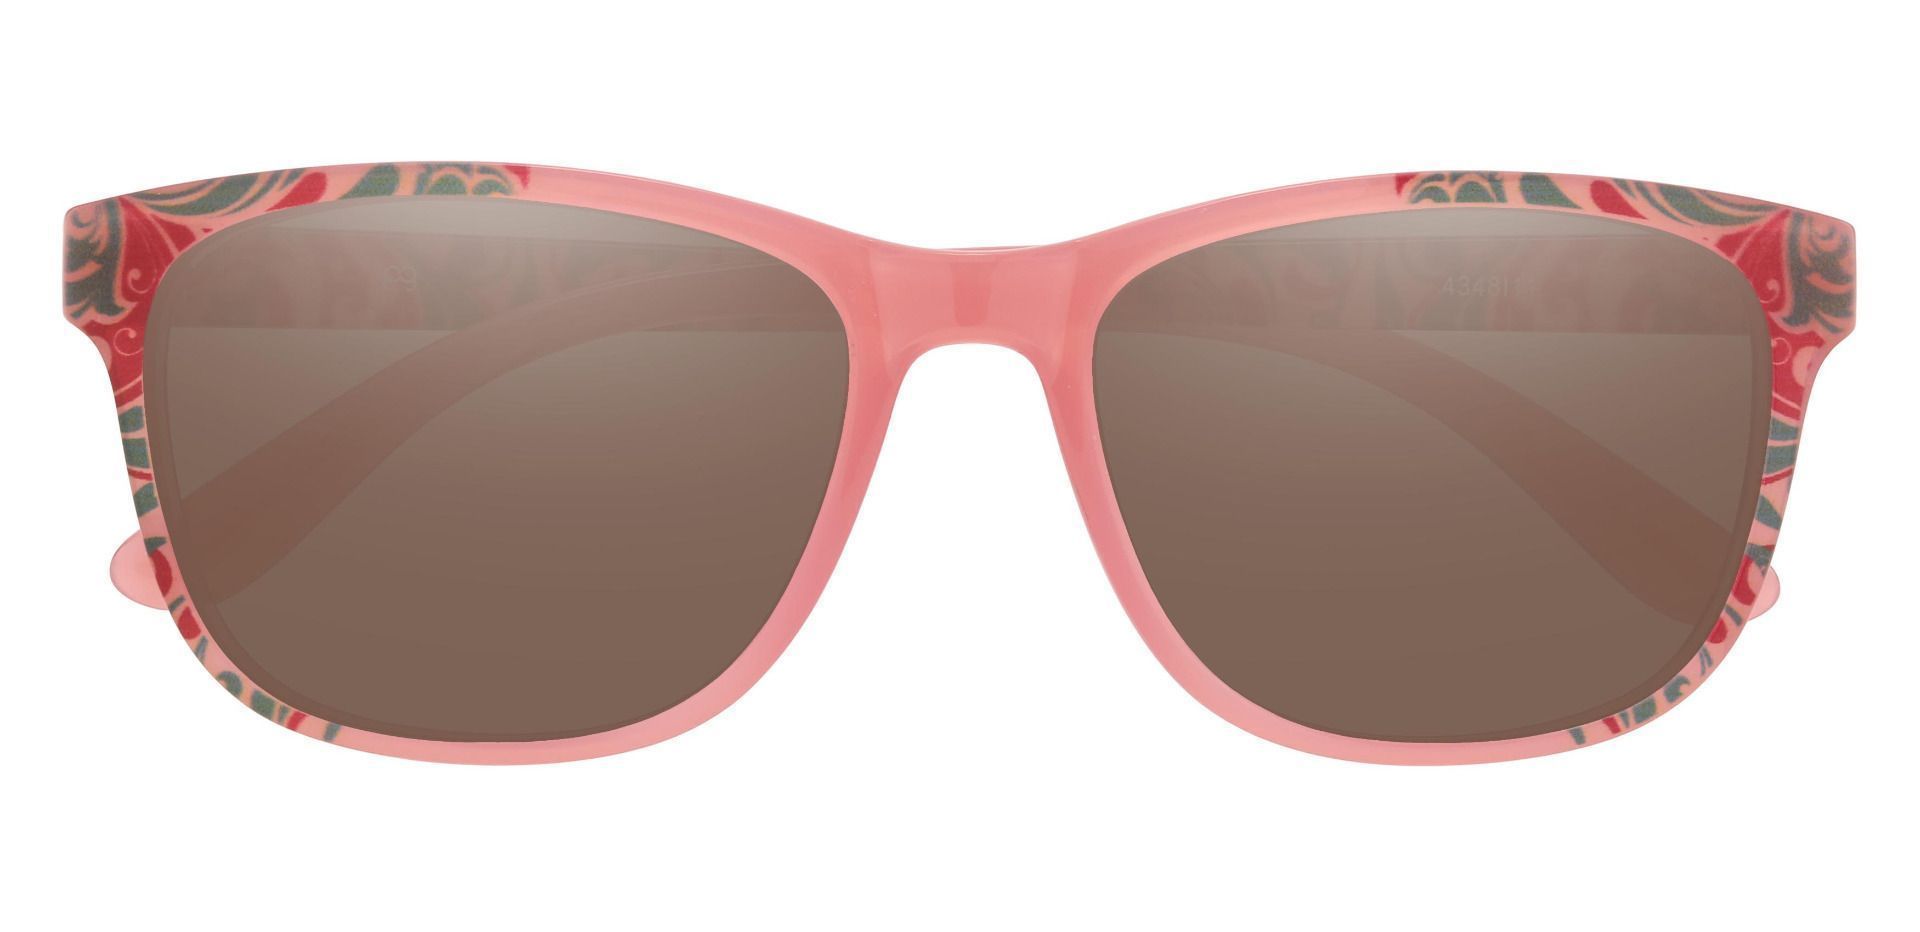 Juliet Square Prescription Sunglasses - Pink Frame With Brown Lenses